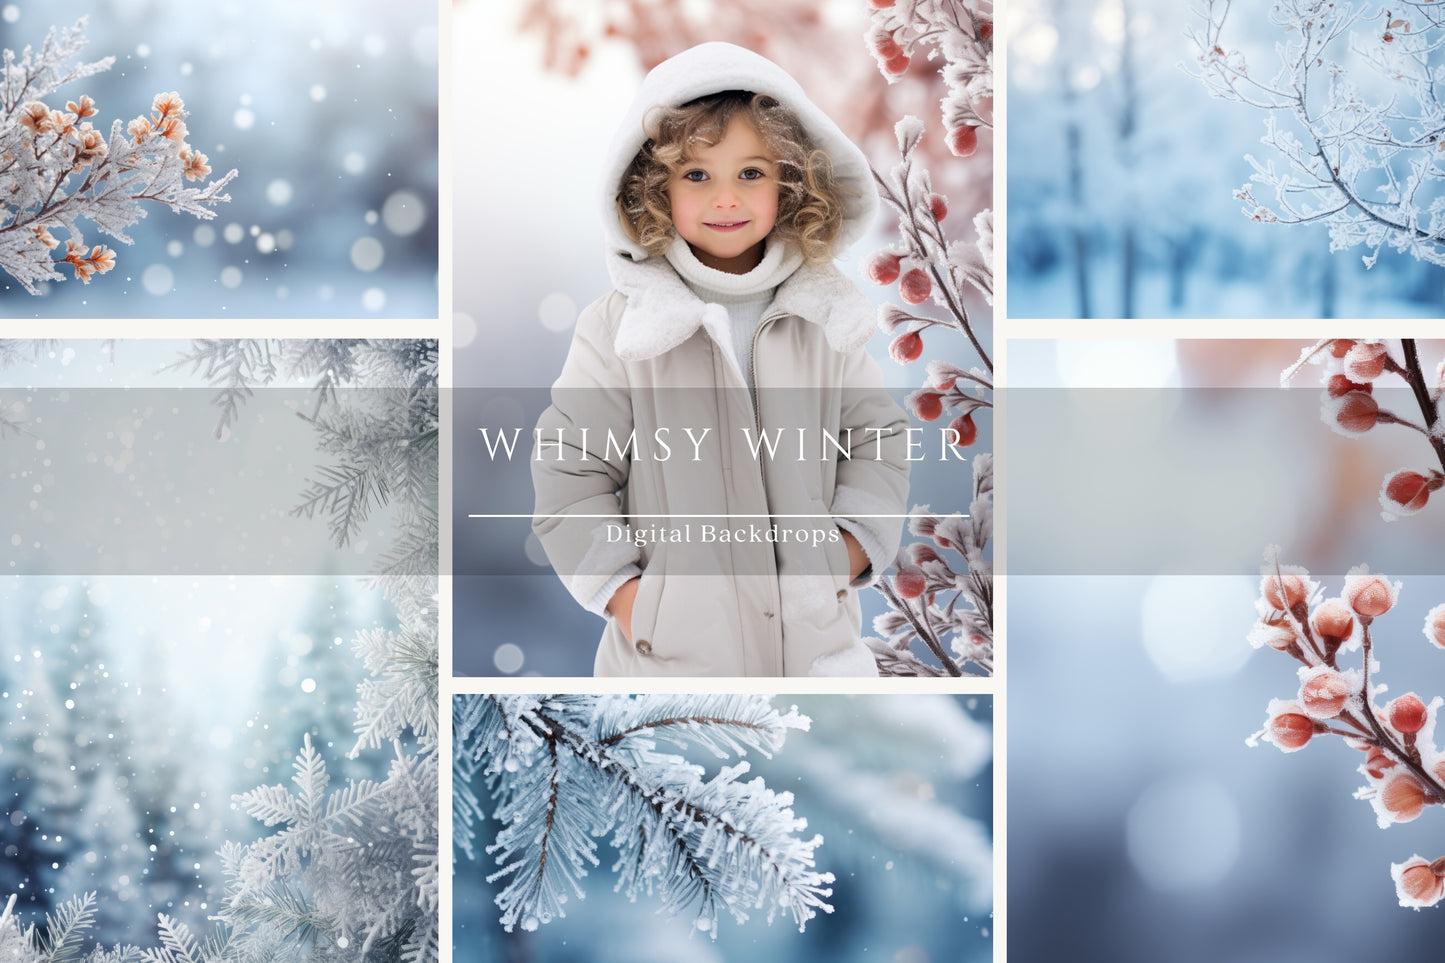 Whimsy Winter Portrait Digital Backdrops